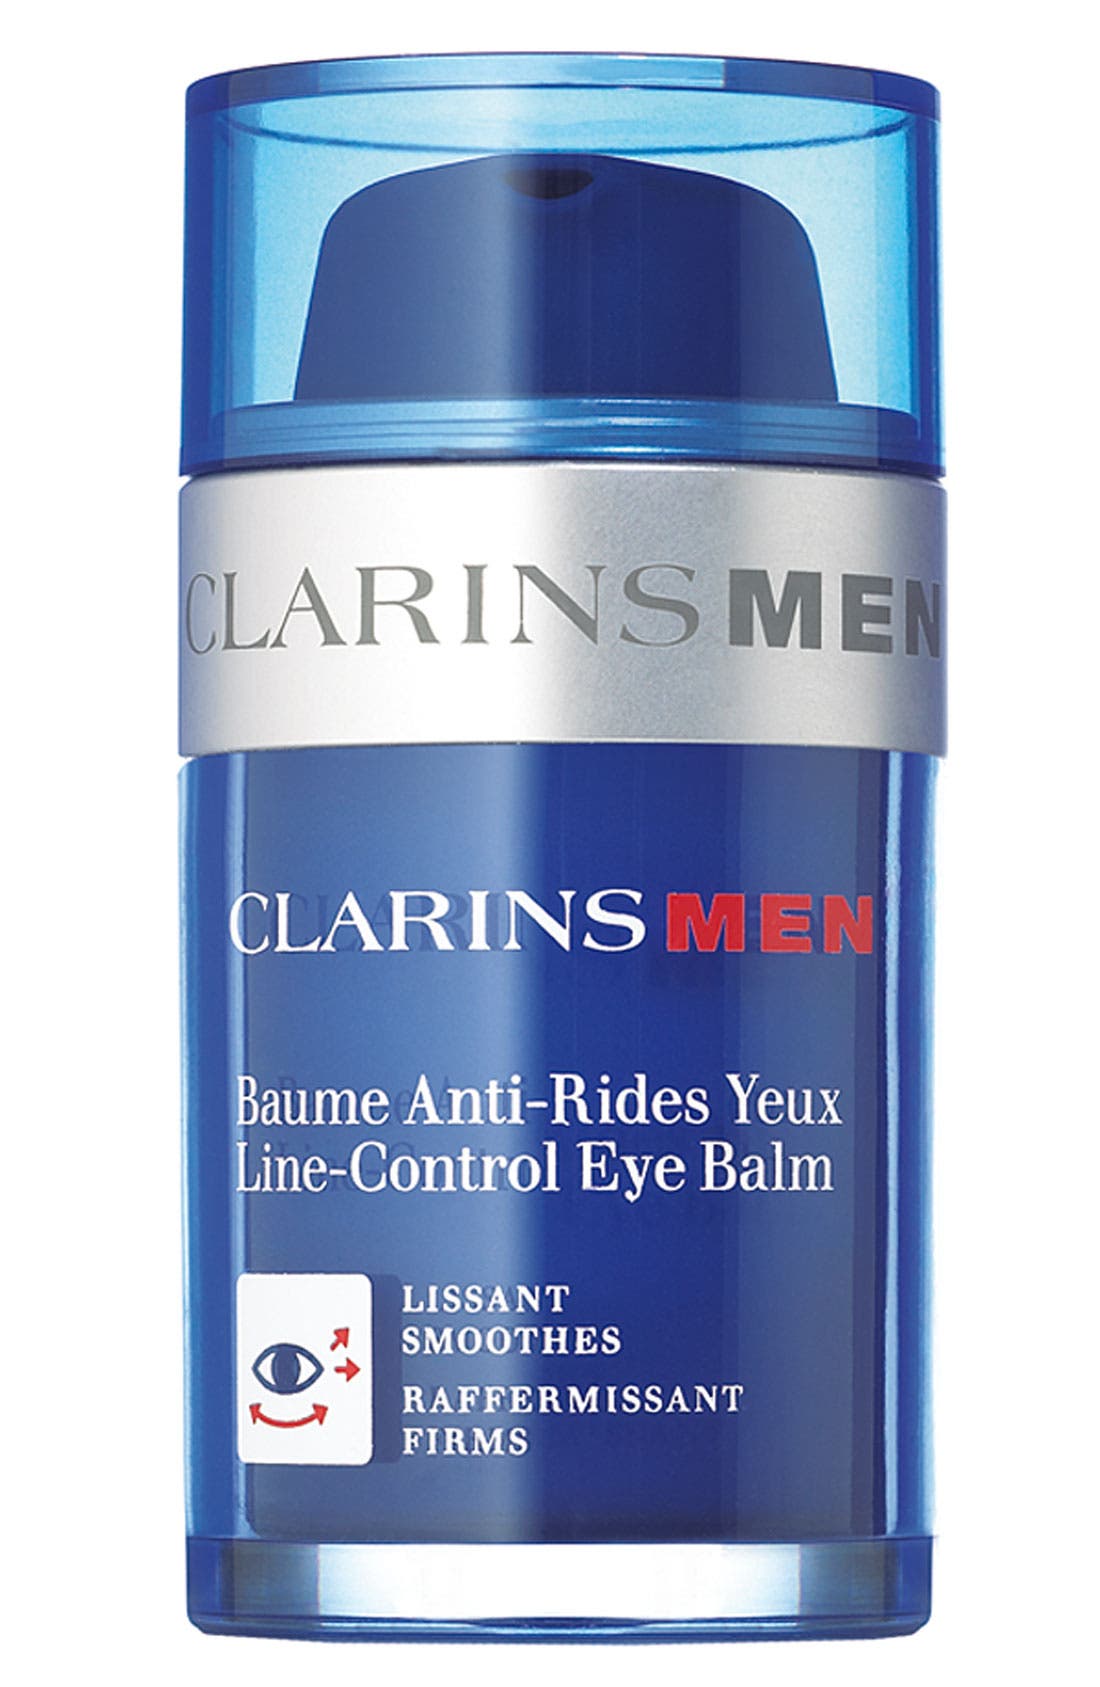 ClarinsMen Line-Control Eye Balm